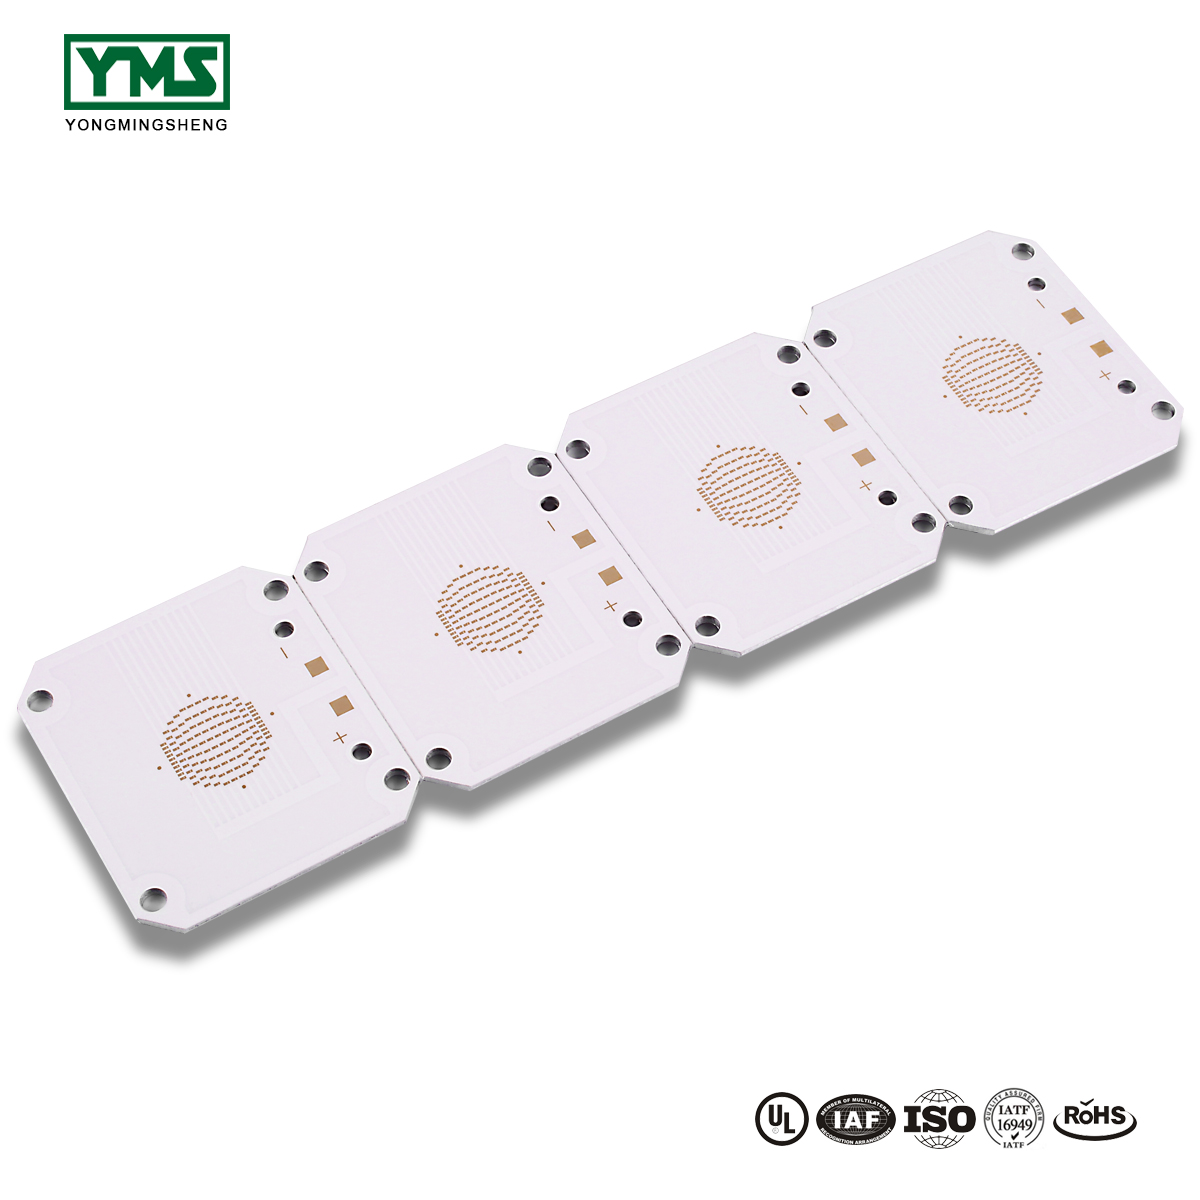 Best quality 2layer Alu Core Pcb - 1Layer Aluminum base Board | YMSPCB – Yongmingsheng